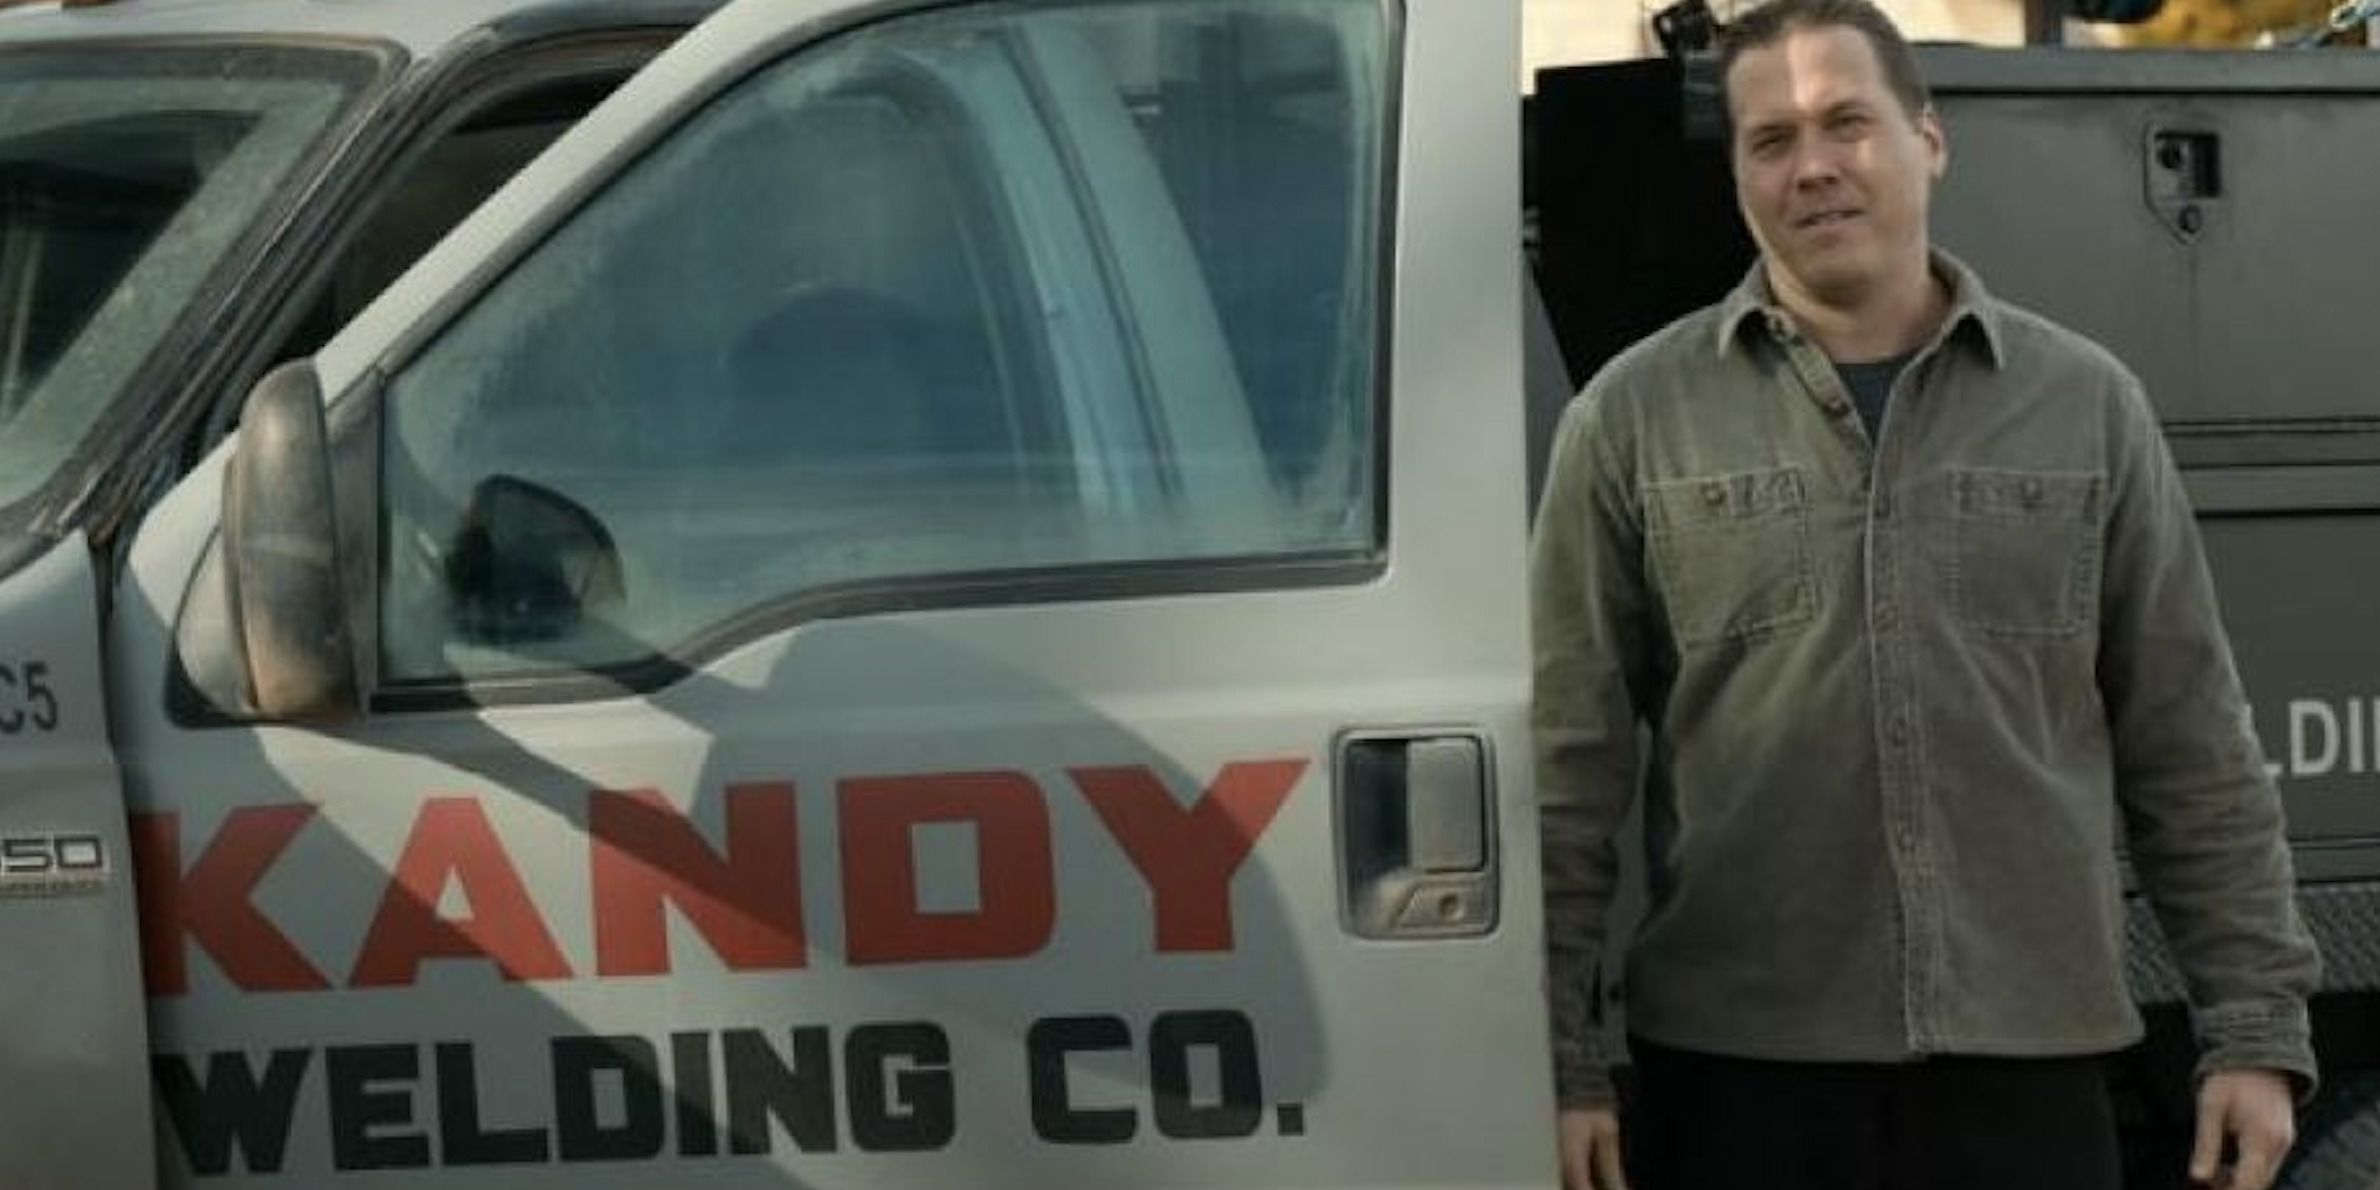 El Camino: A Breaking Bad Movie Kandy Welding Co.